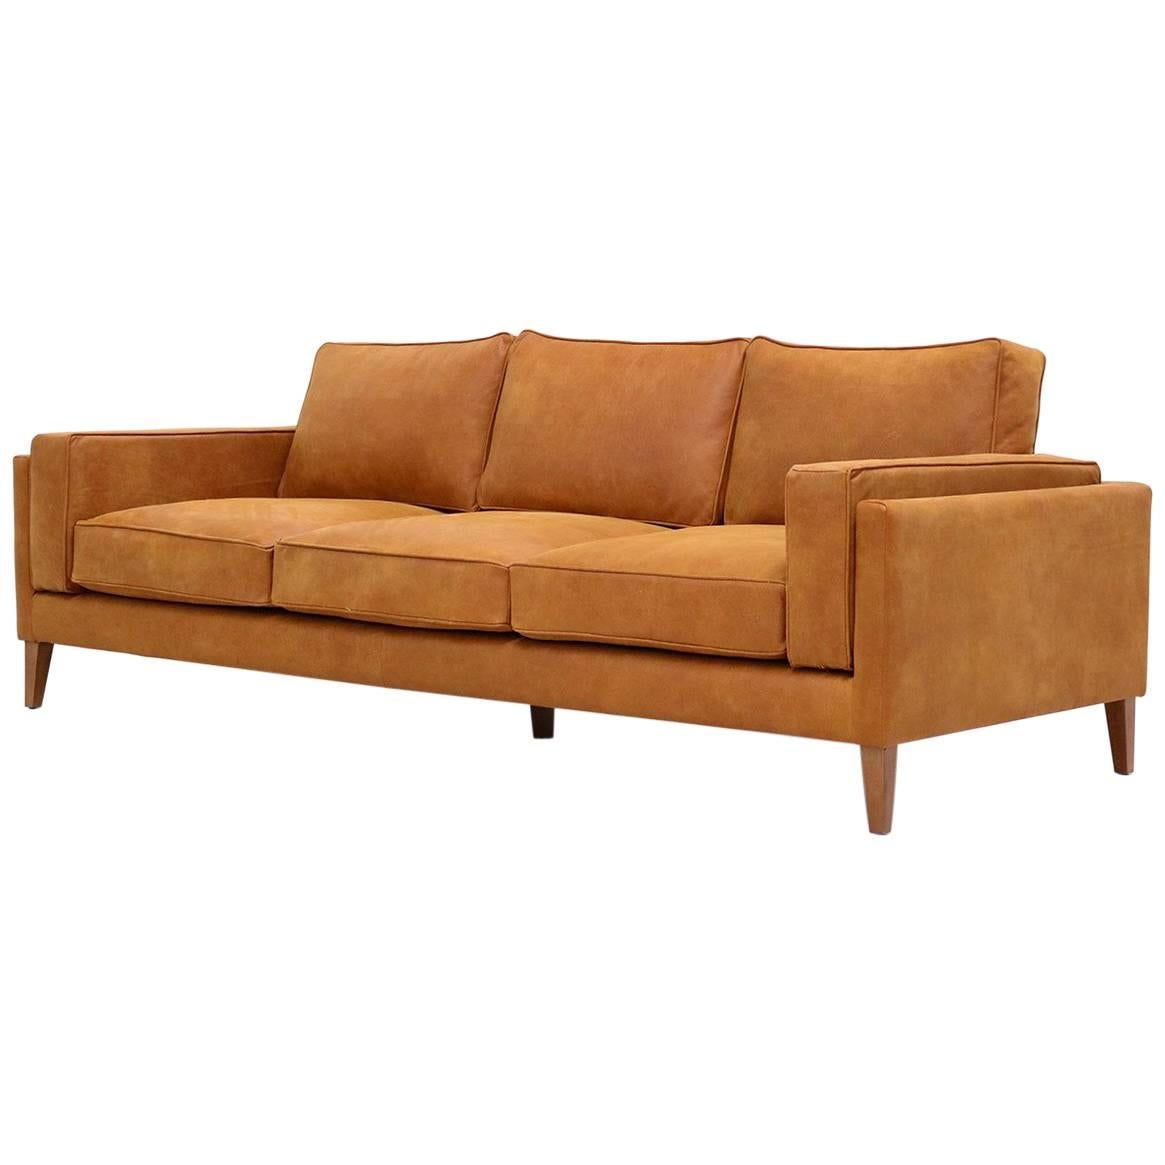 Danish Midcentury Modern Three-Seat Cognac Leather Coyoacan Sofa Handmade Custom